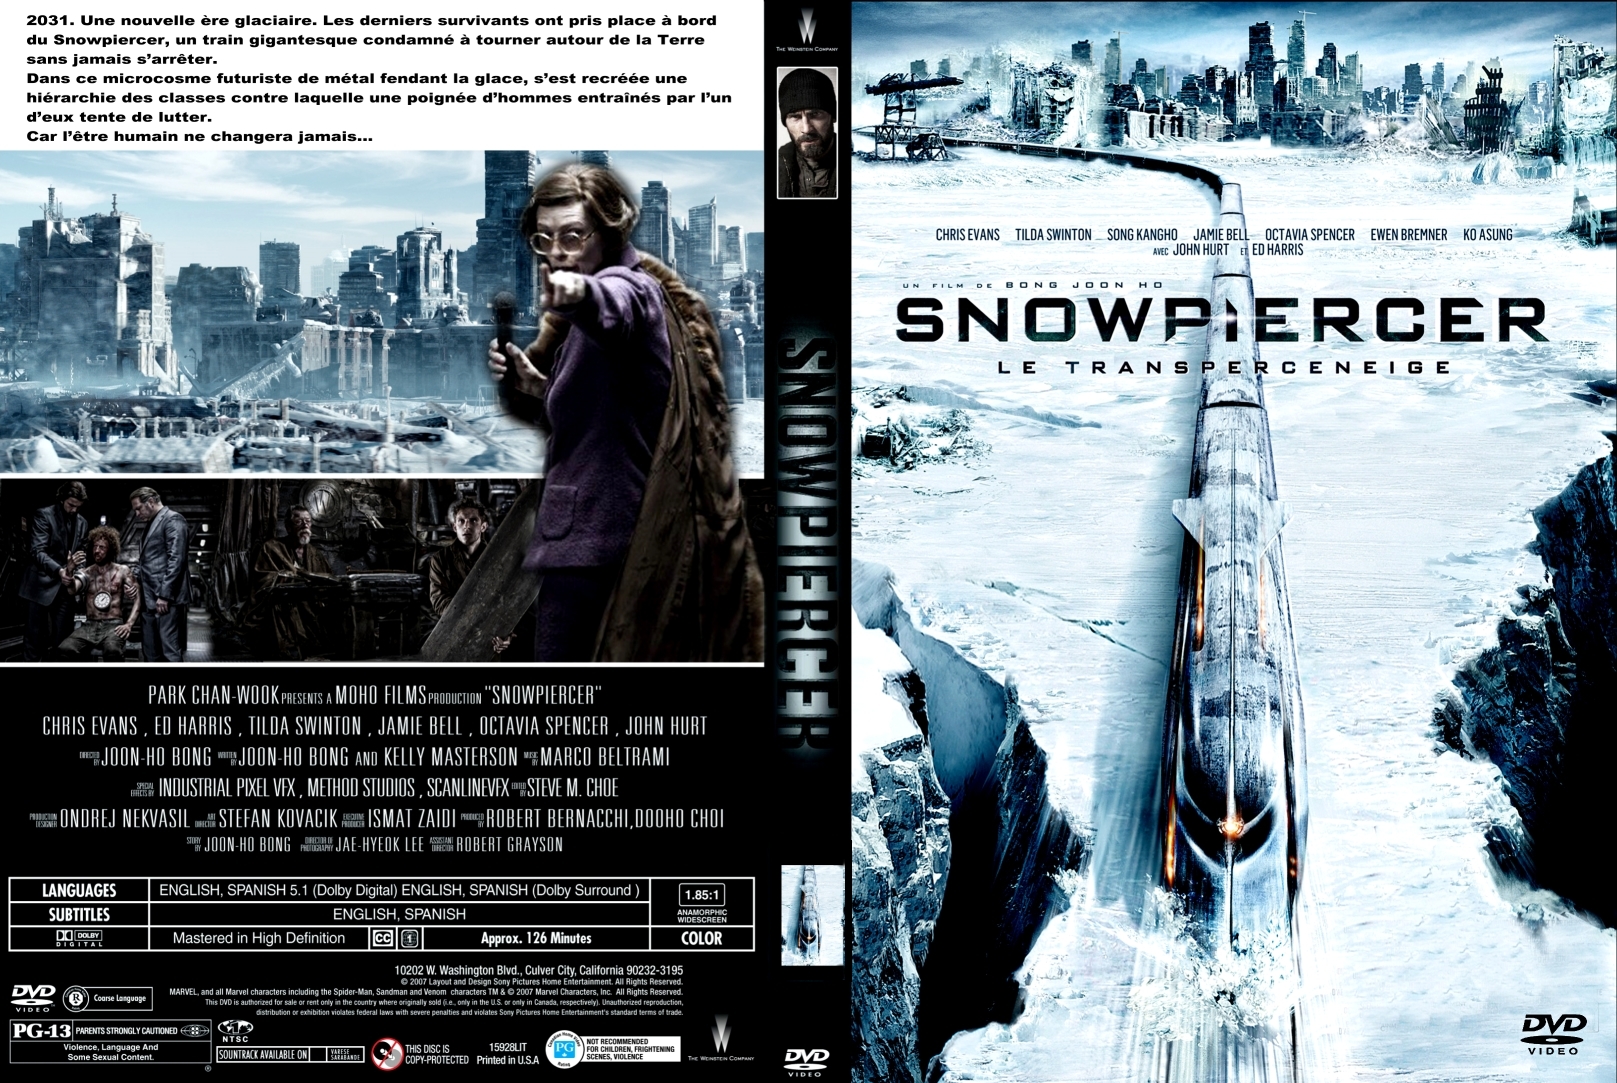 Jaquette DVD Snowpiercer, Le Transperceneige custom